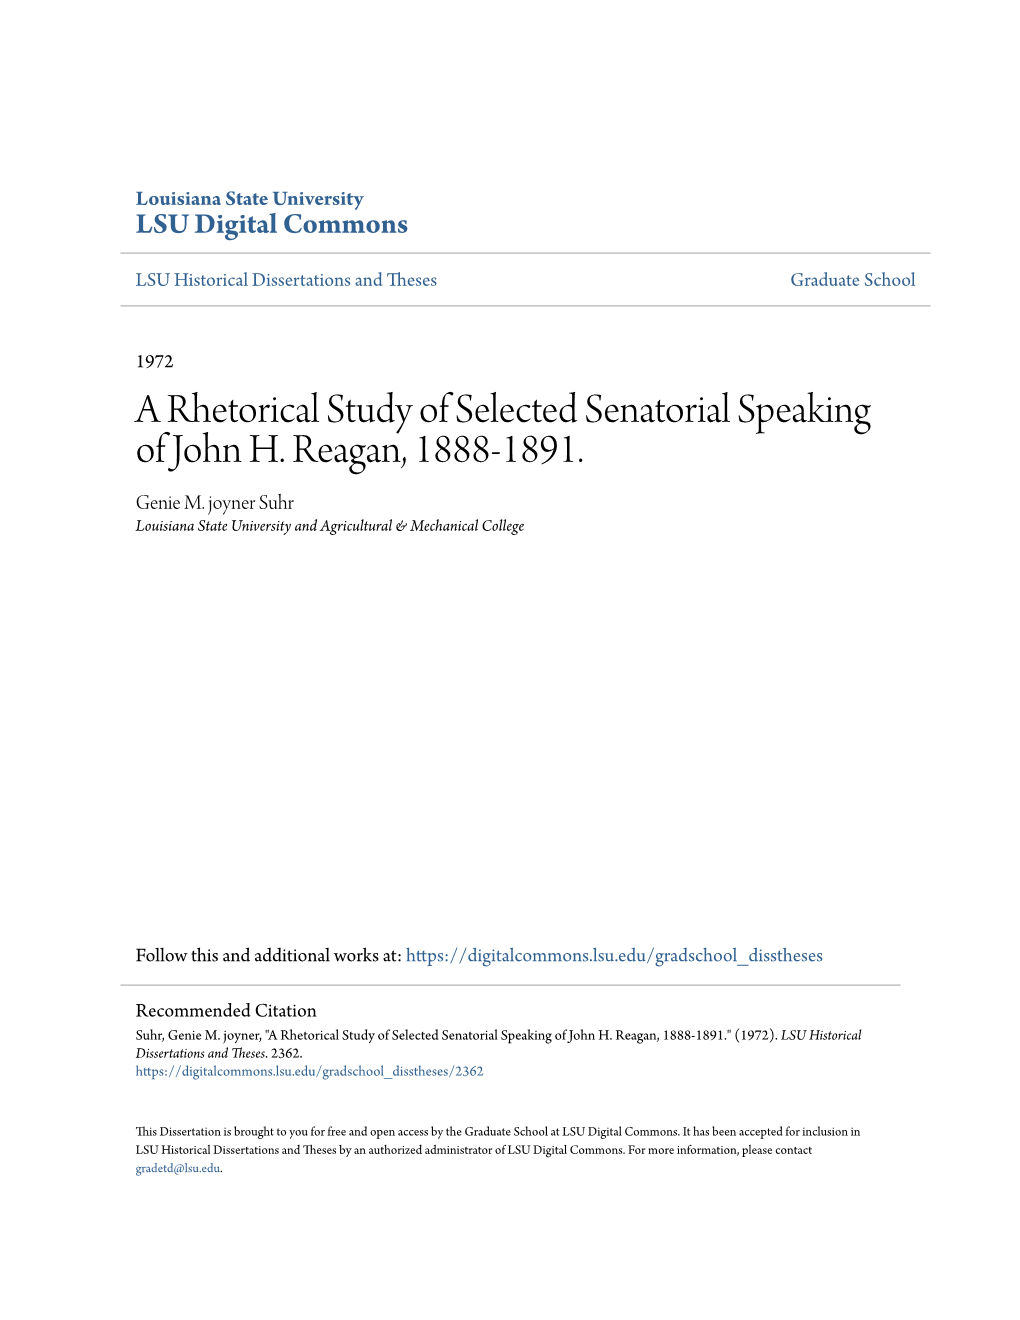 A Rhetorical Study of Selected Senatorial Speaking of John H